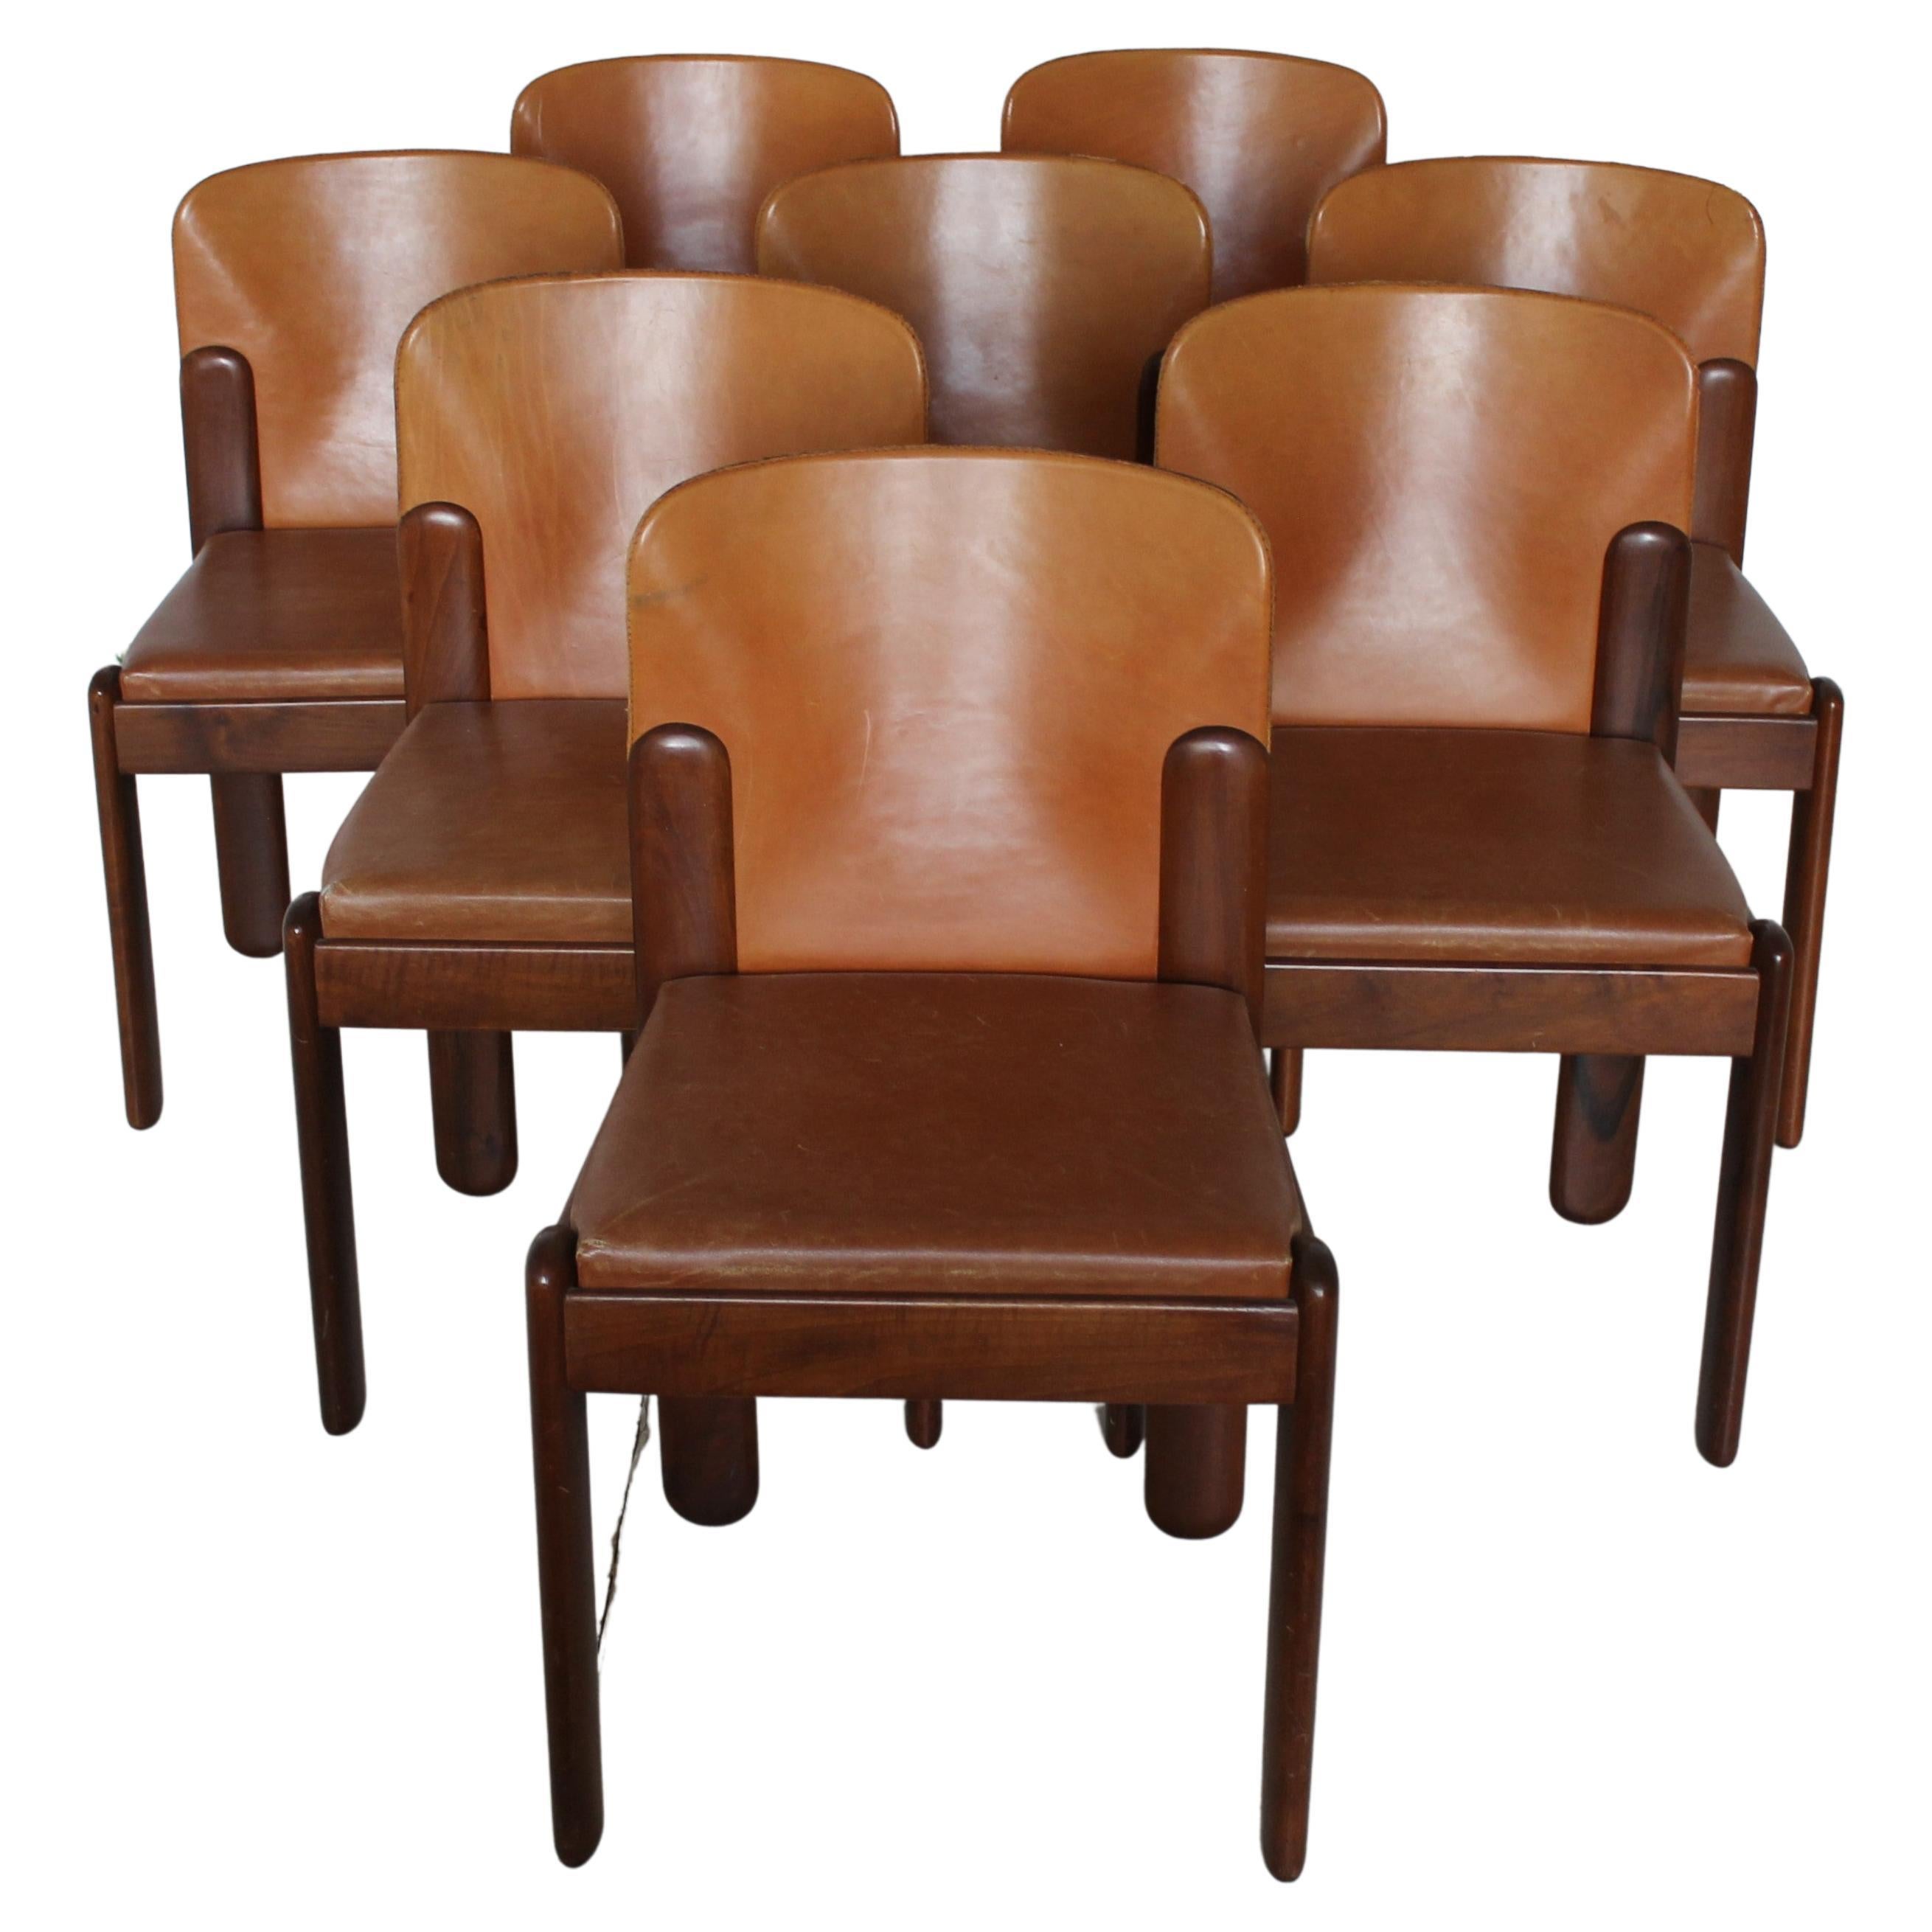 Silvio Coppola for Bernini Brown Leather Chairs, Italy, 1971